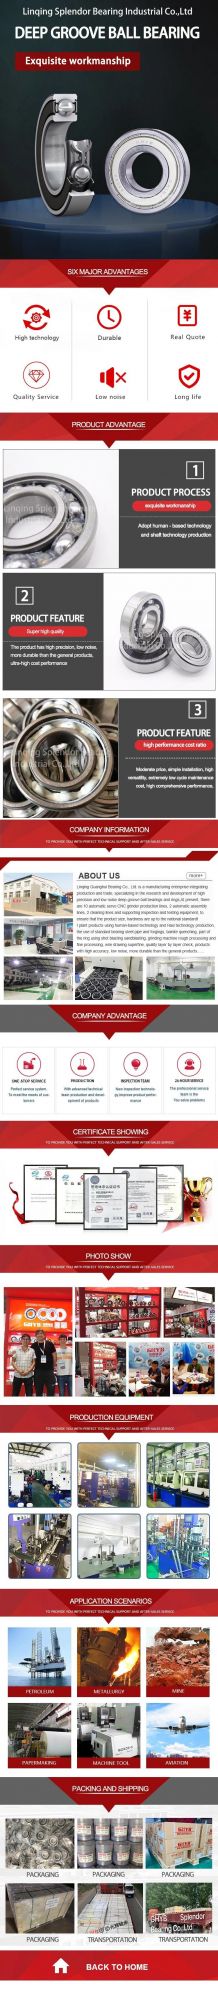 China Factory Distributor Supplier of Deep Groove Ball Bearings for Motors, Compressors, Alternators 6003-2rz/Z2V2